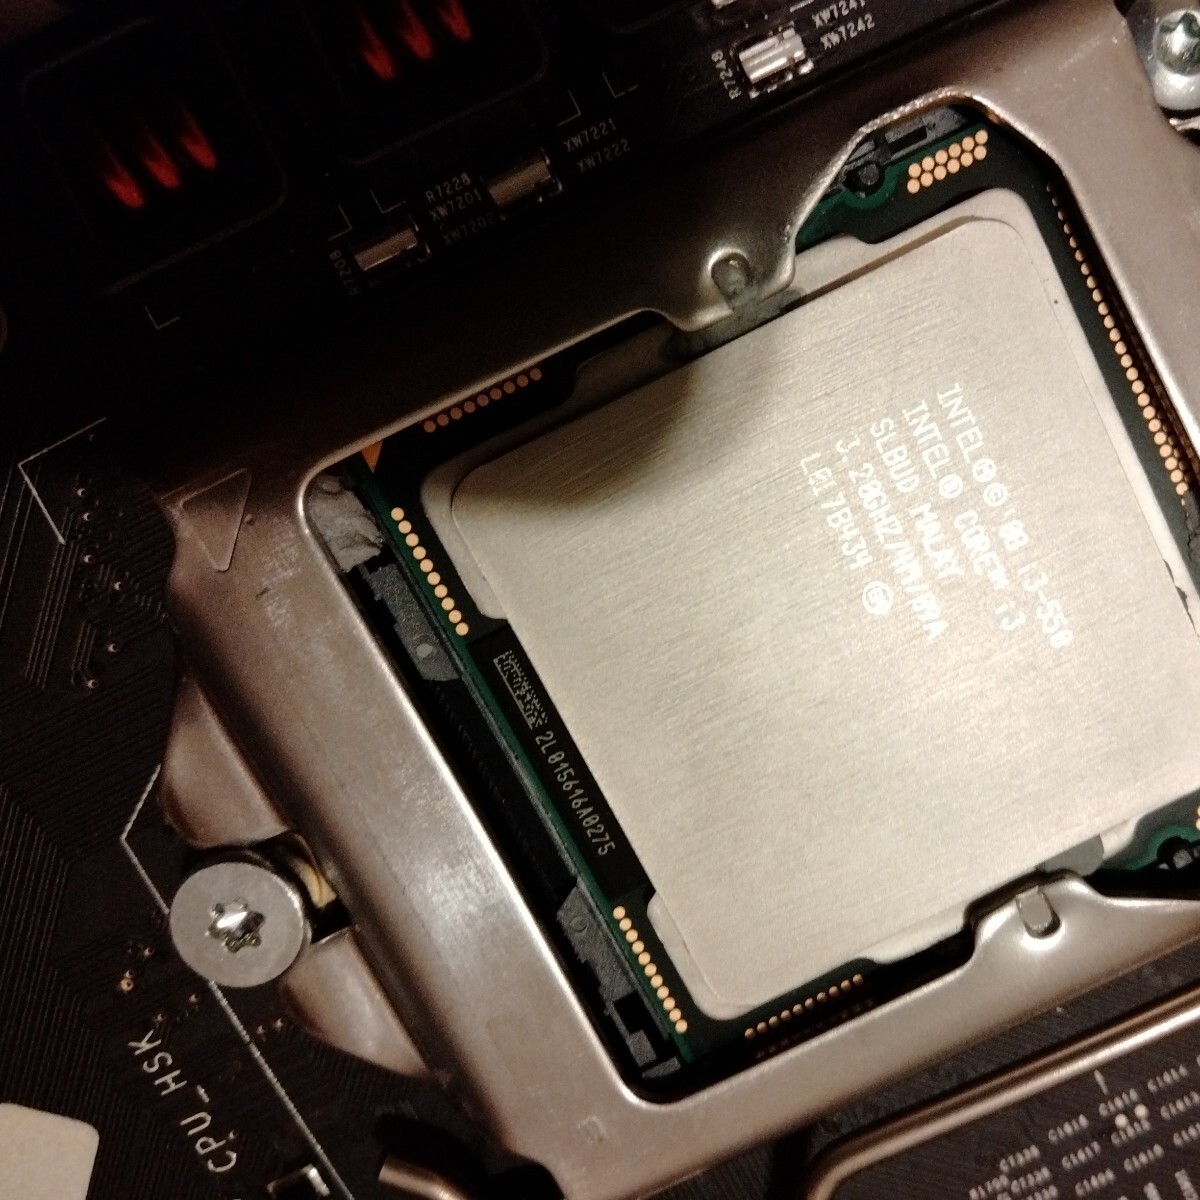 # Intel Core i3-550 3.2GHz CPU # used #iMac 2010. use 